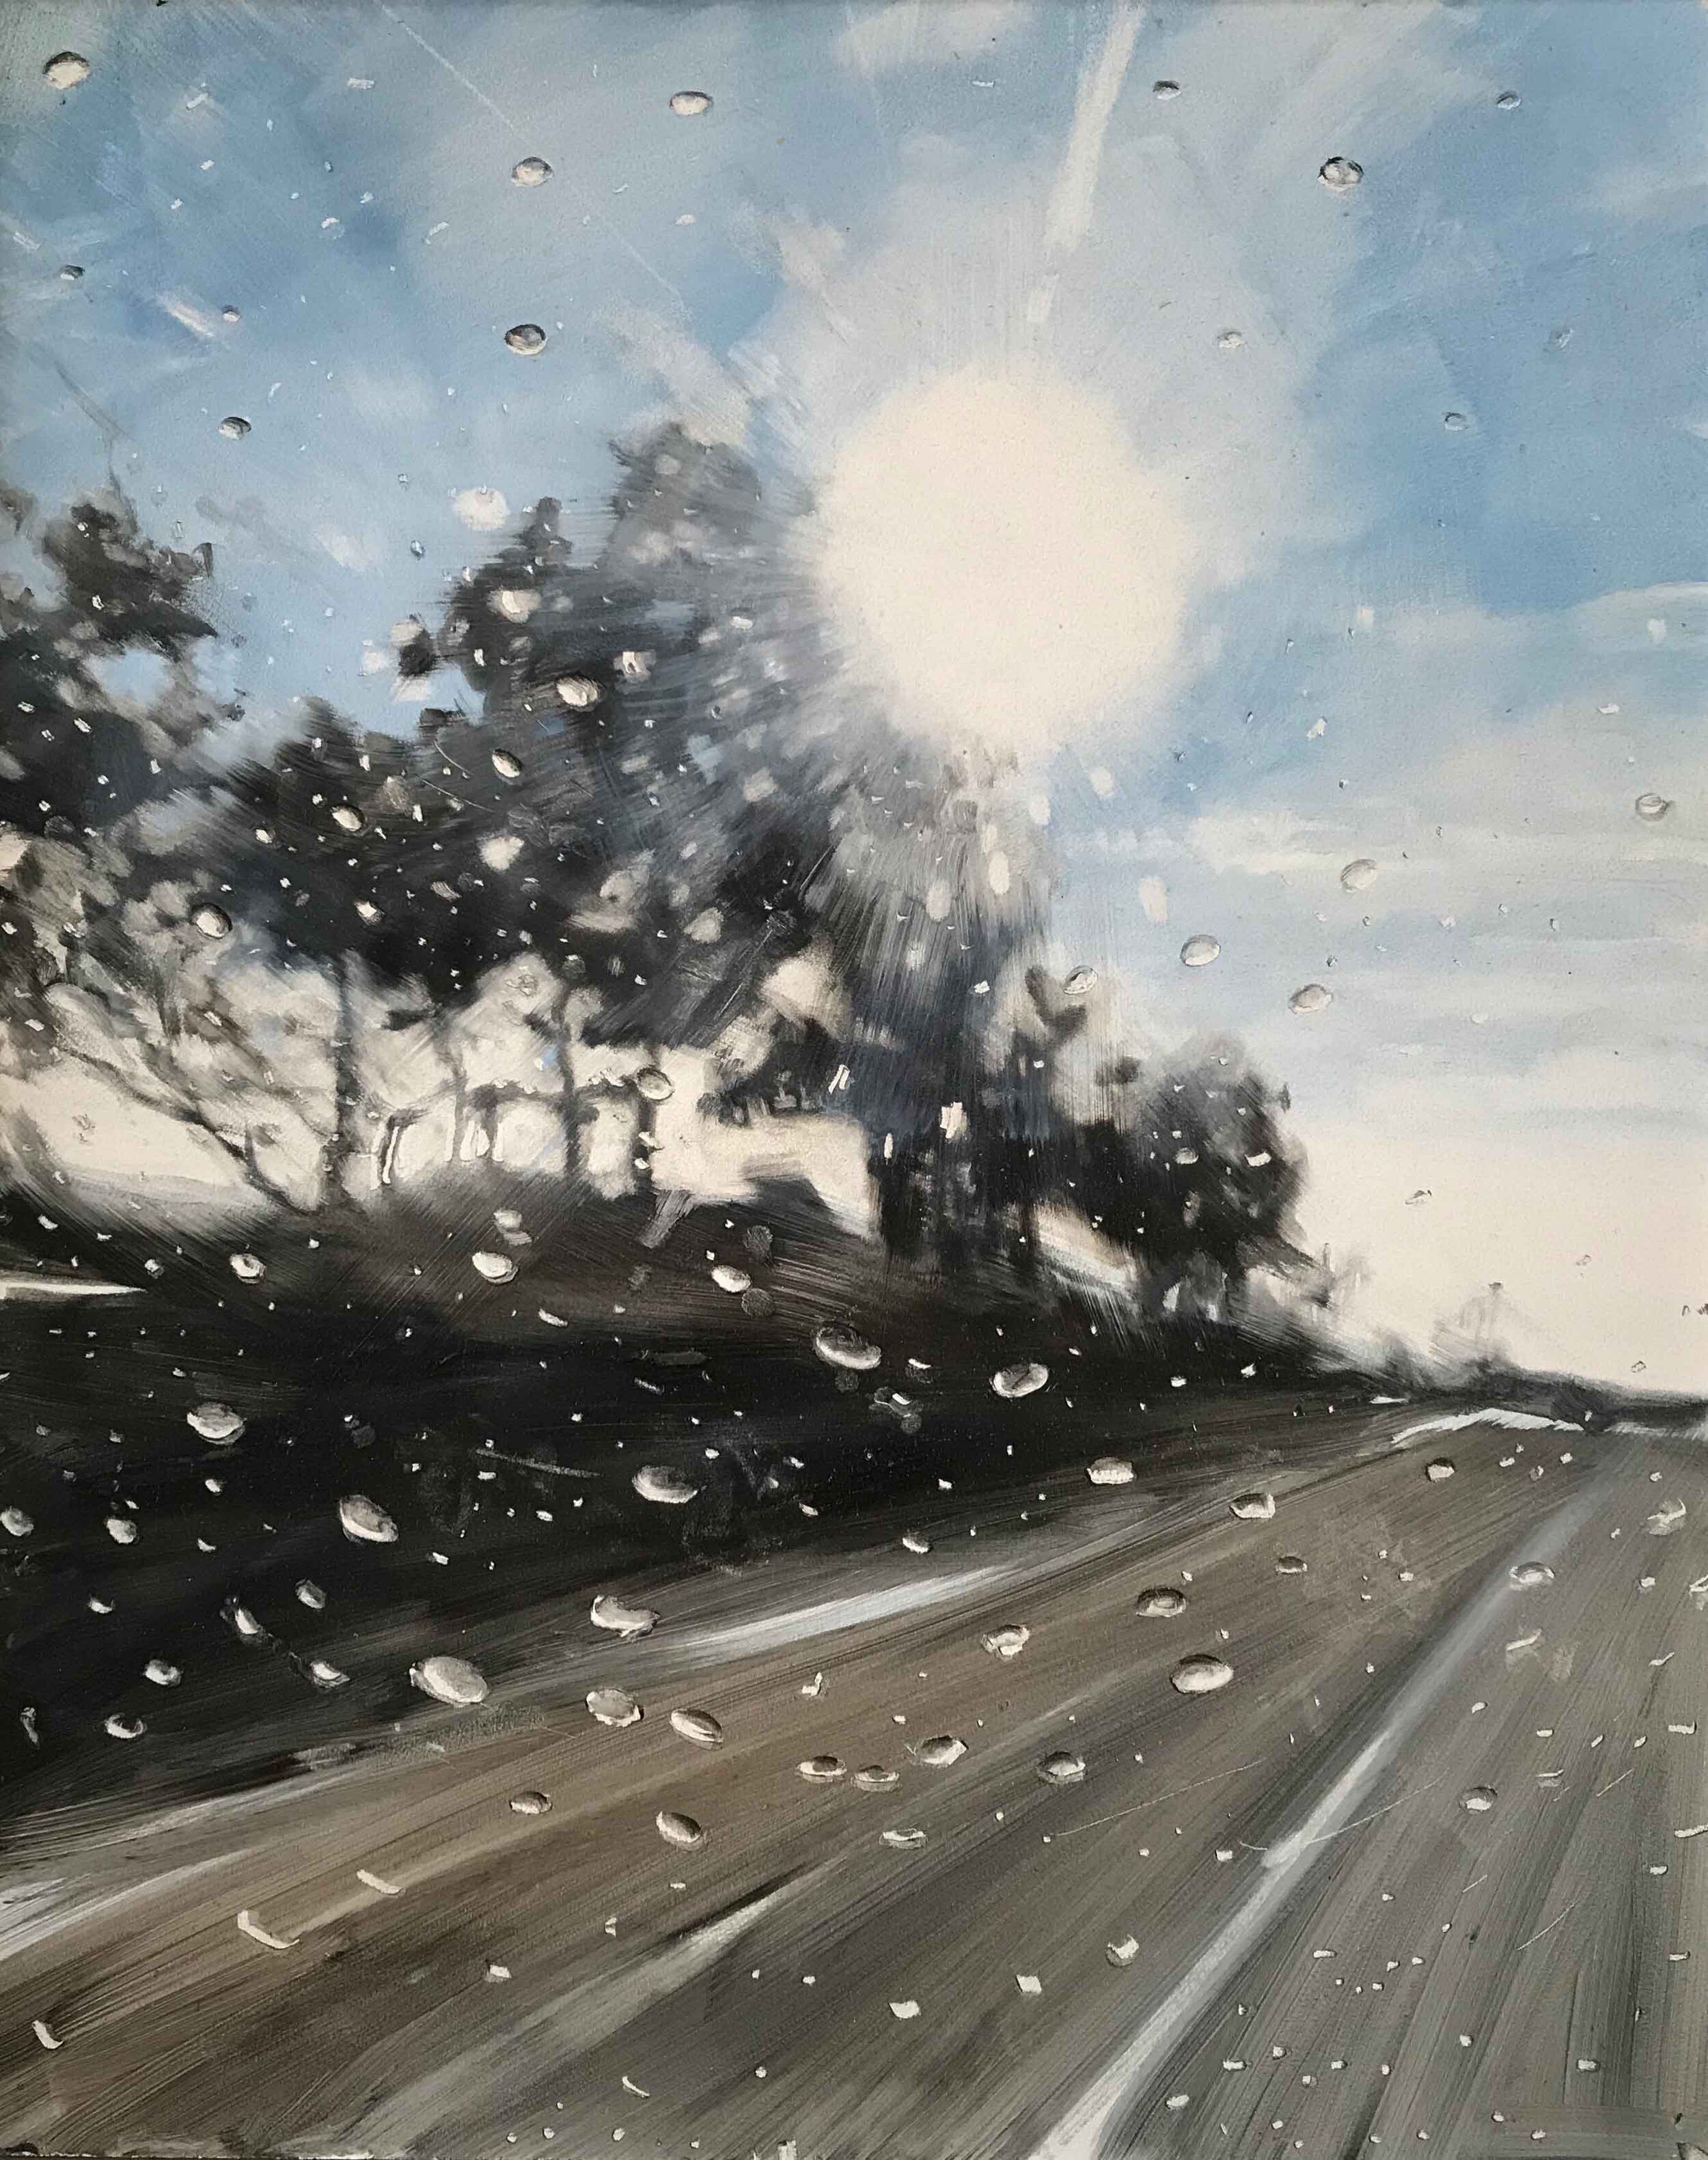  ‘Aggregated Subjectivity’ viii. 2019. Oil on canvas. 